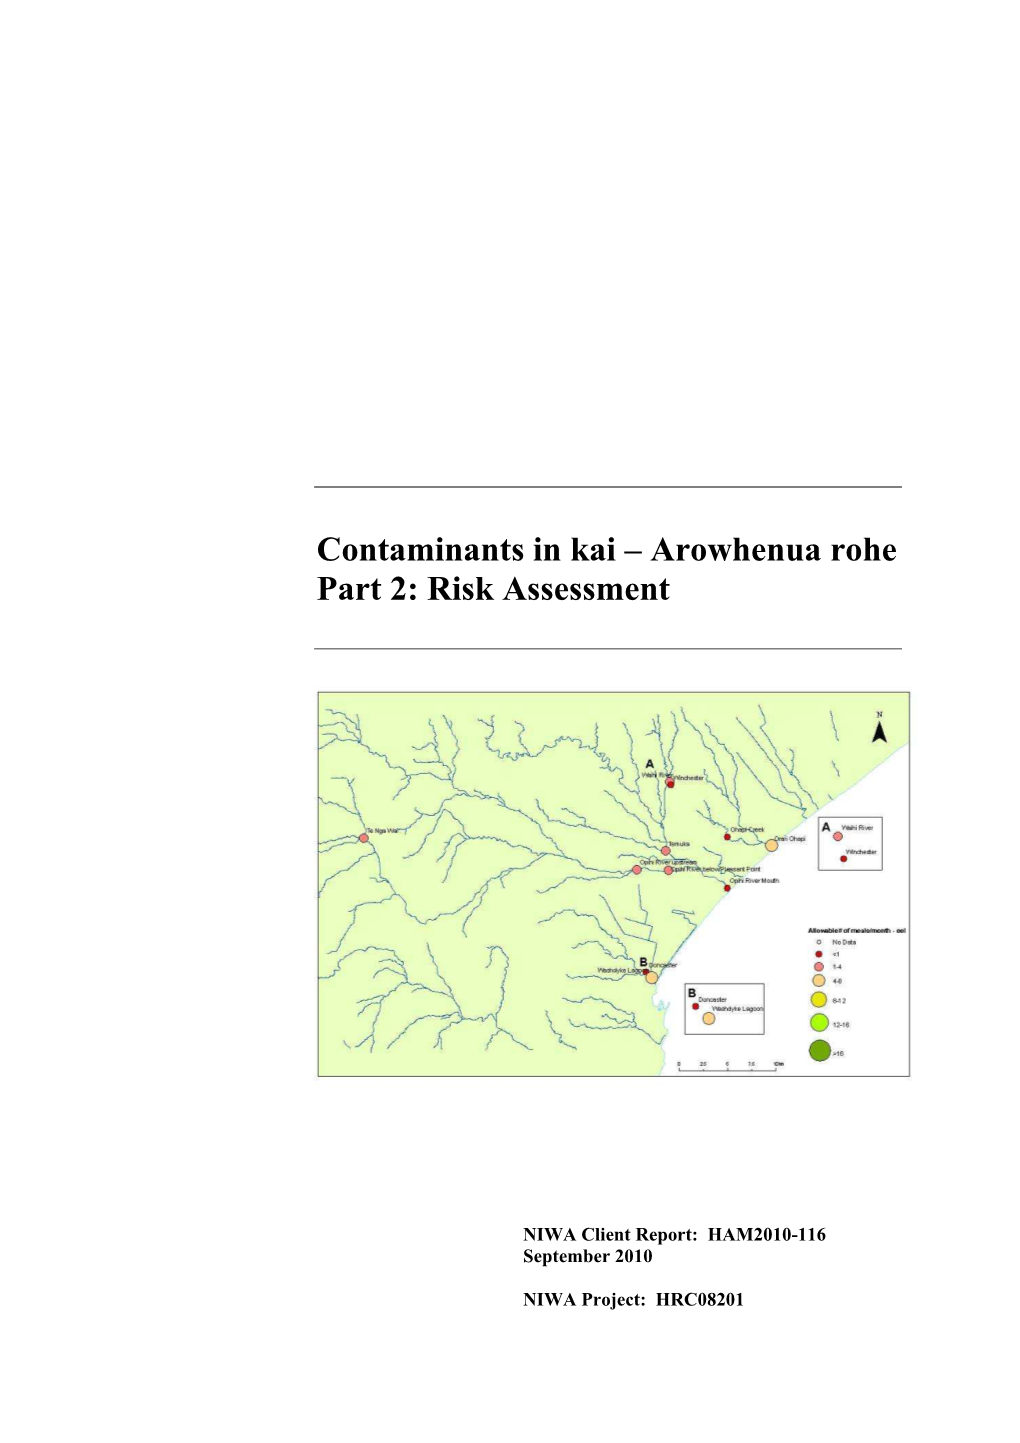 Arowhenua Contaminants Report-Risk Assessment-Final